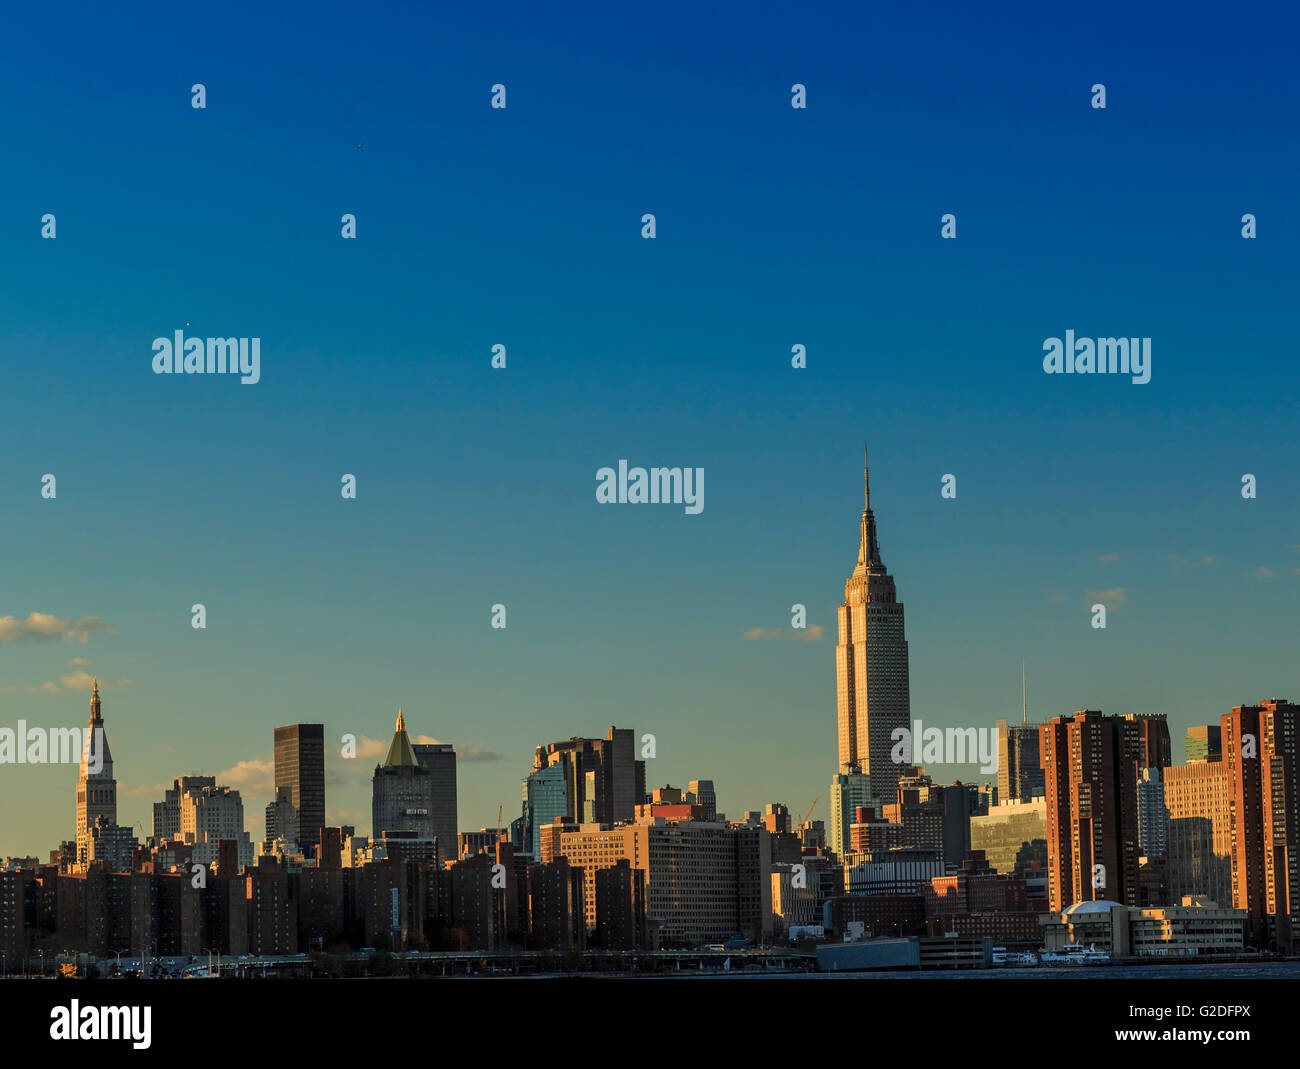 Skyline dispose d' Empire State Building, Manhattan, New York City, USA Banque D'Images